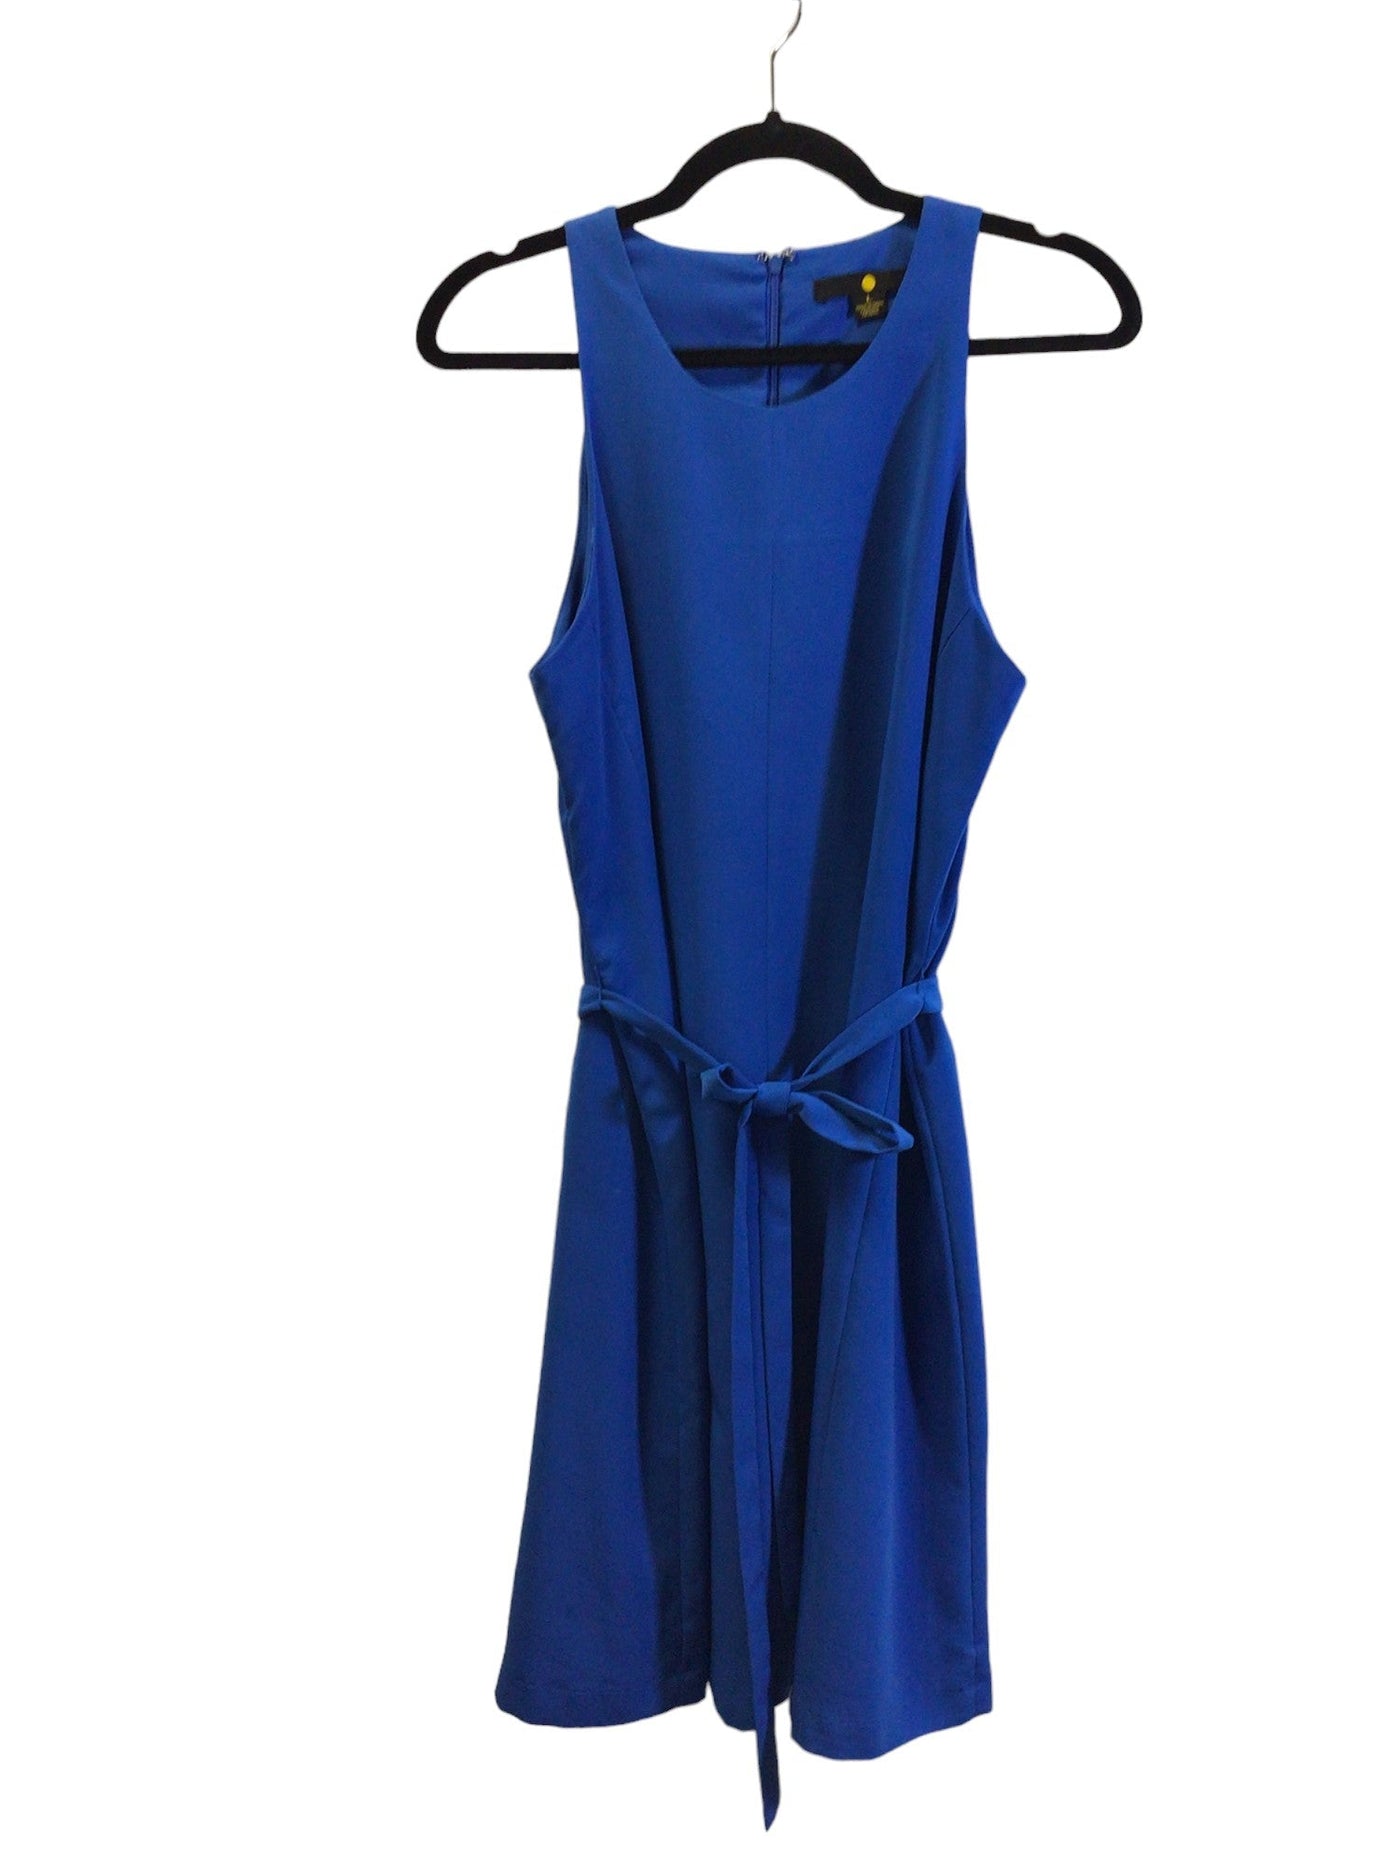 UNBRANDED Women Wrap Dresses Regular fit in Blue - Size L | 11.99 $ KOOP